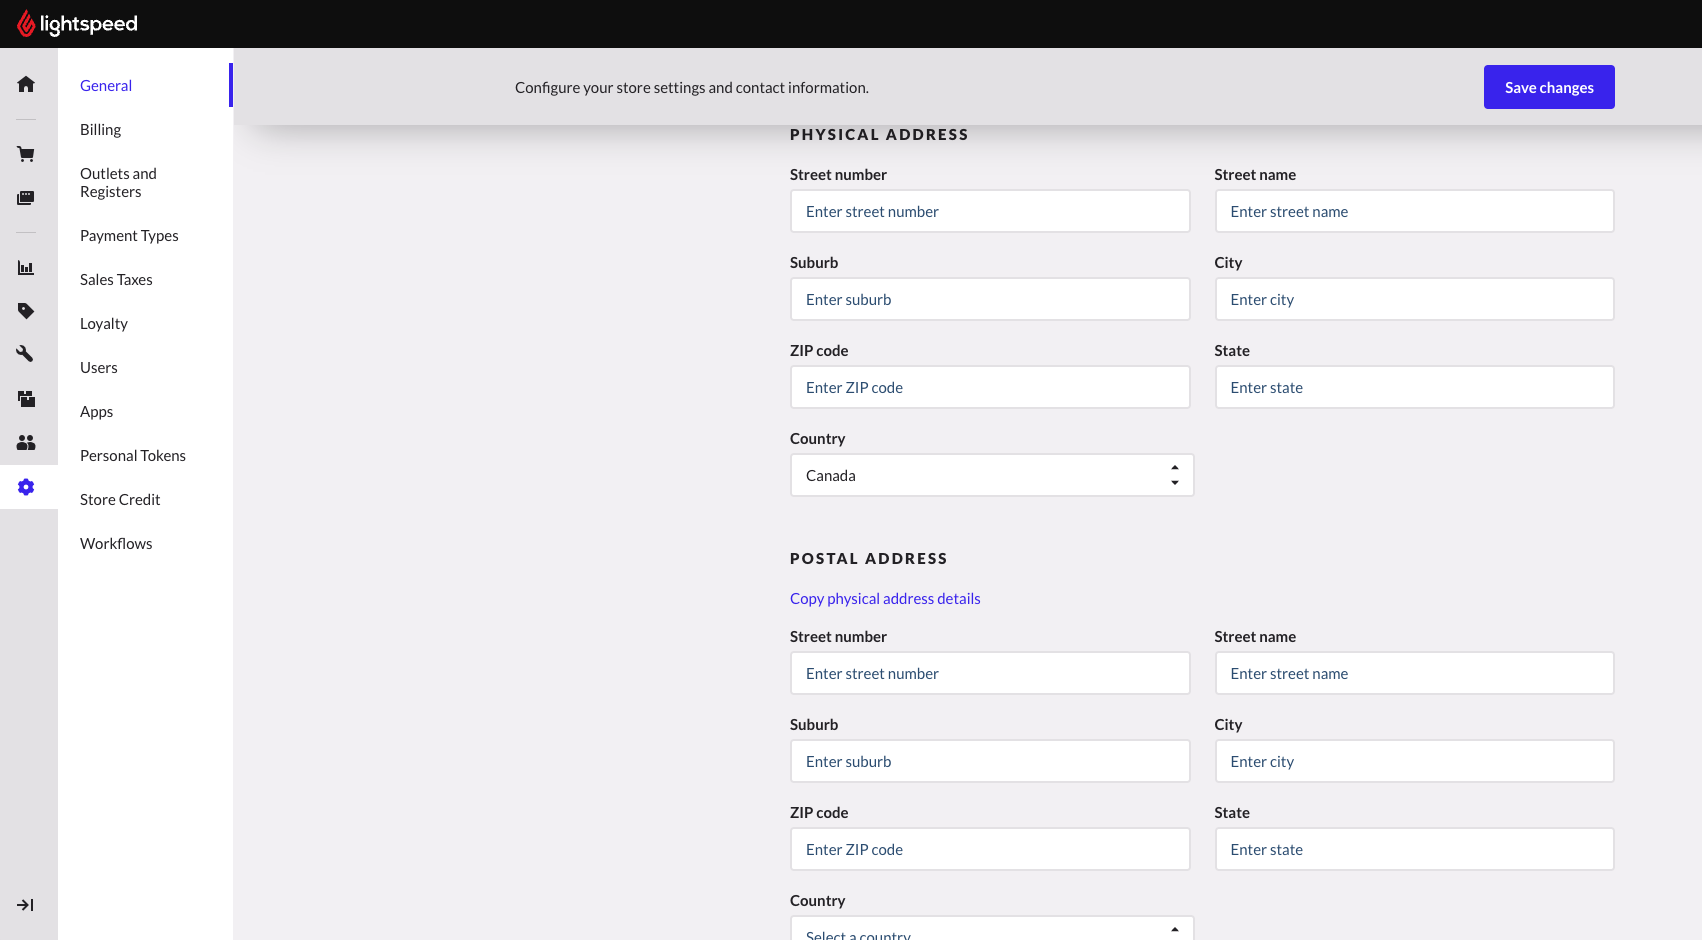 General settings page showing address fields.